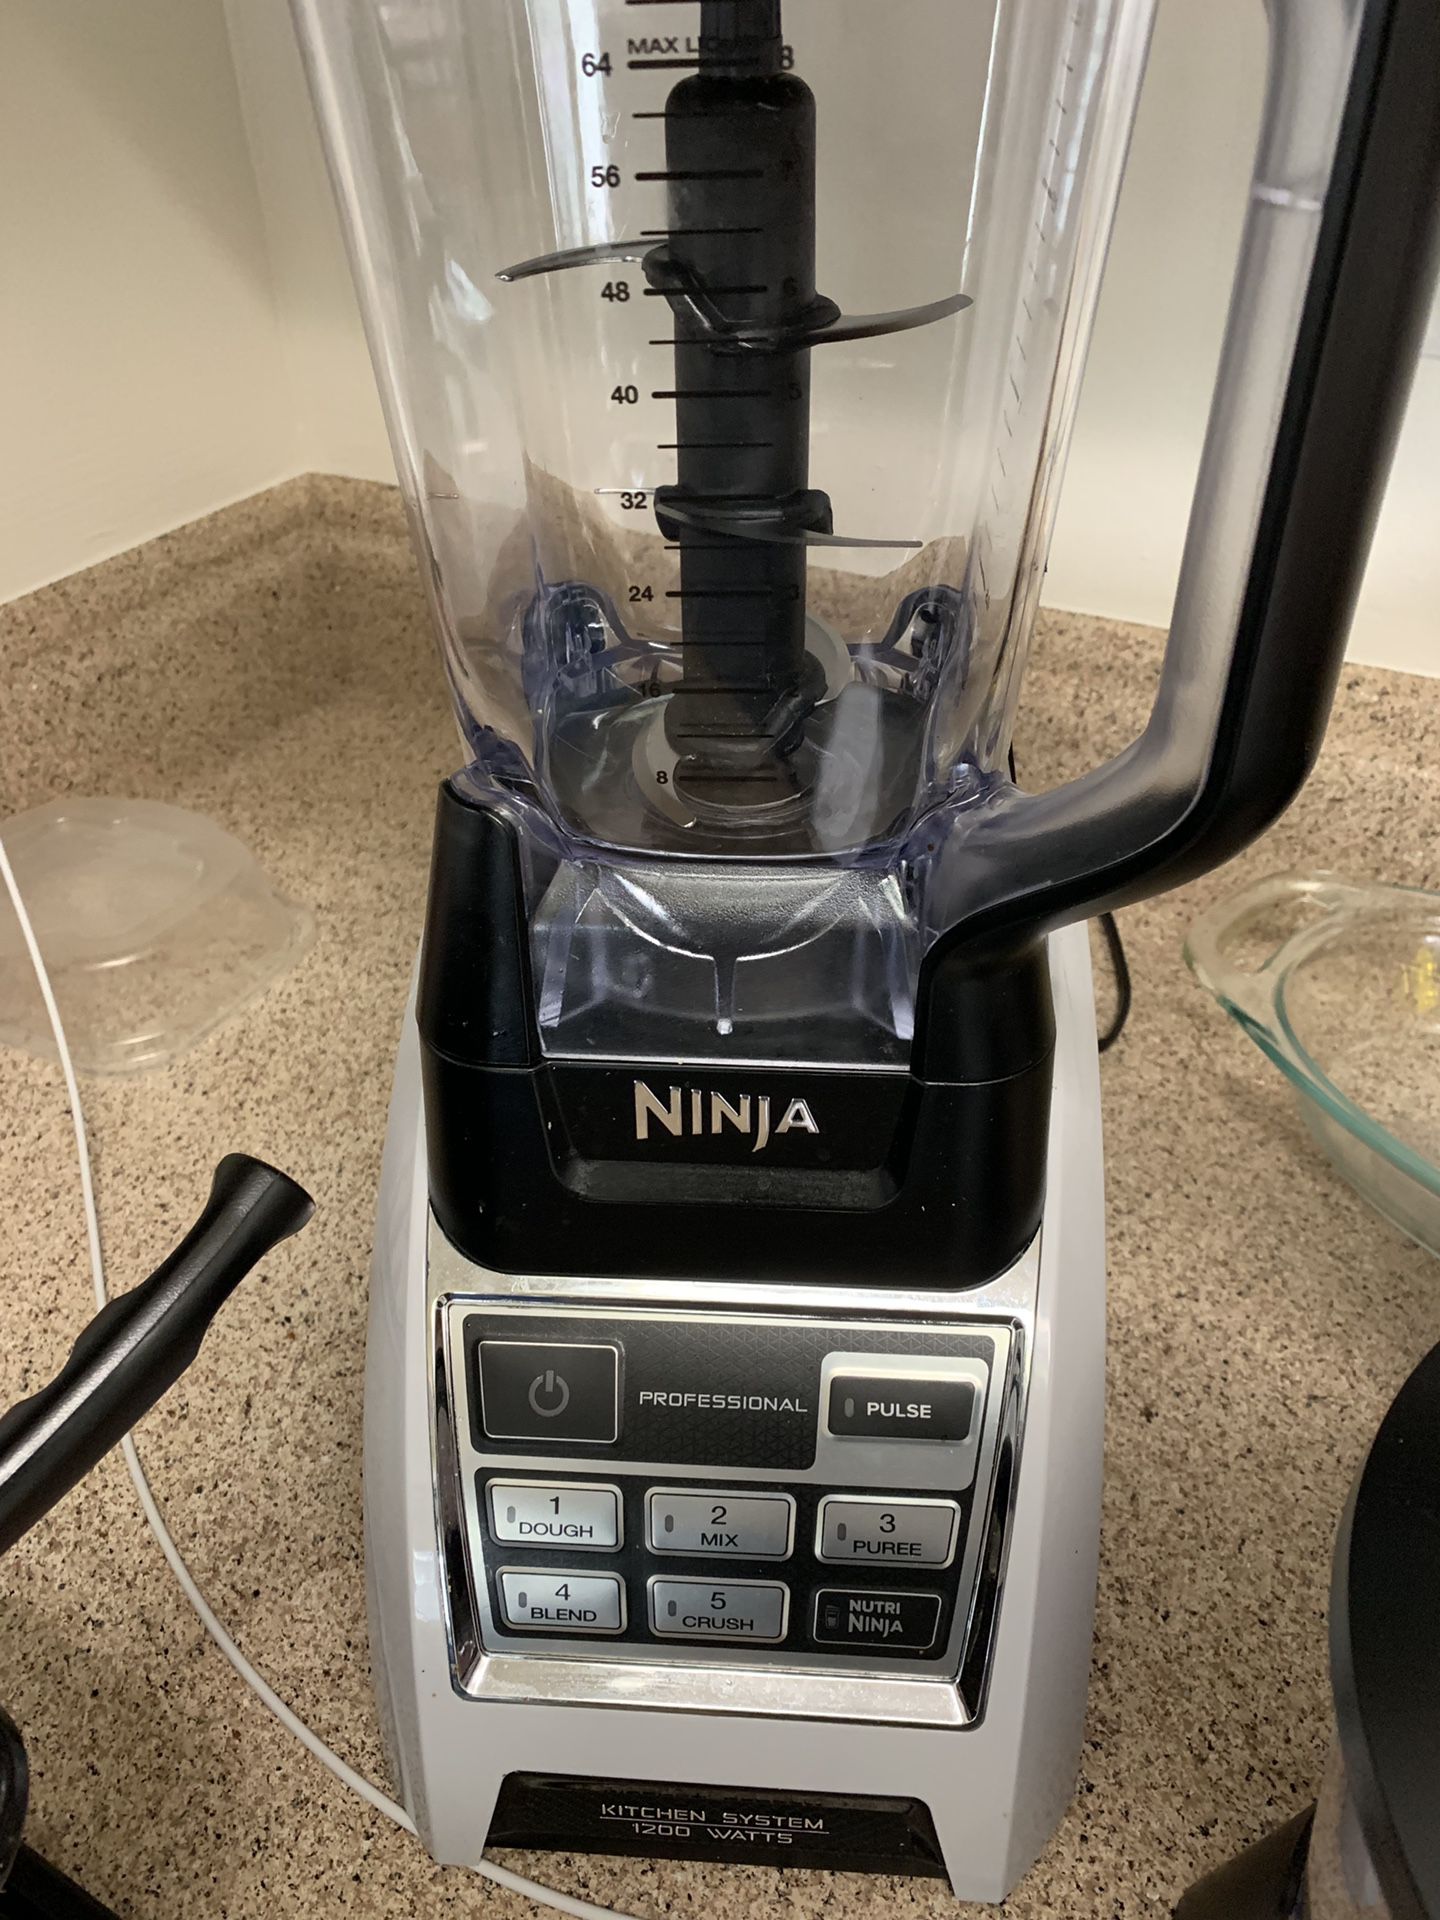 Ninja Kitchen System